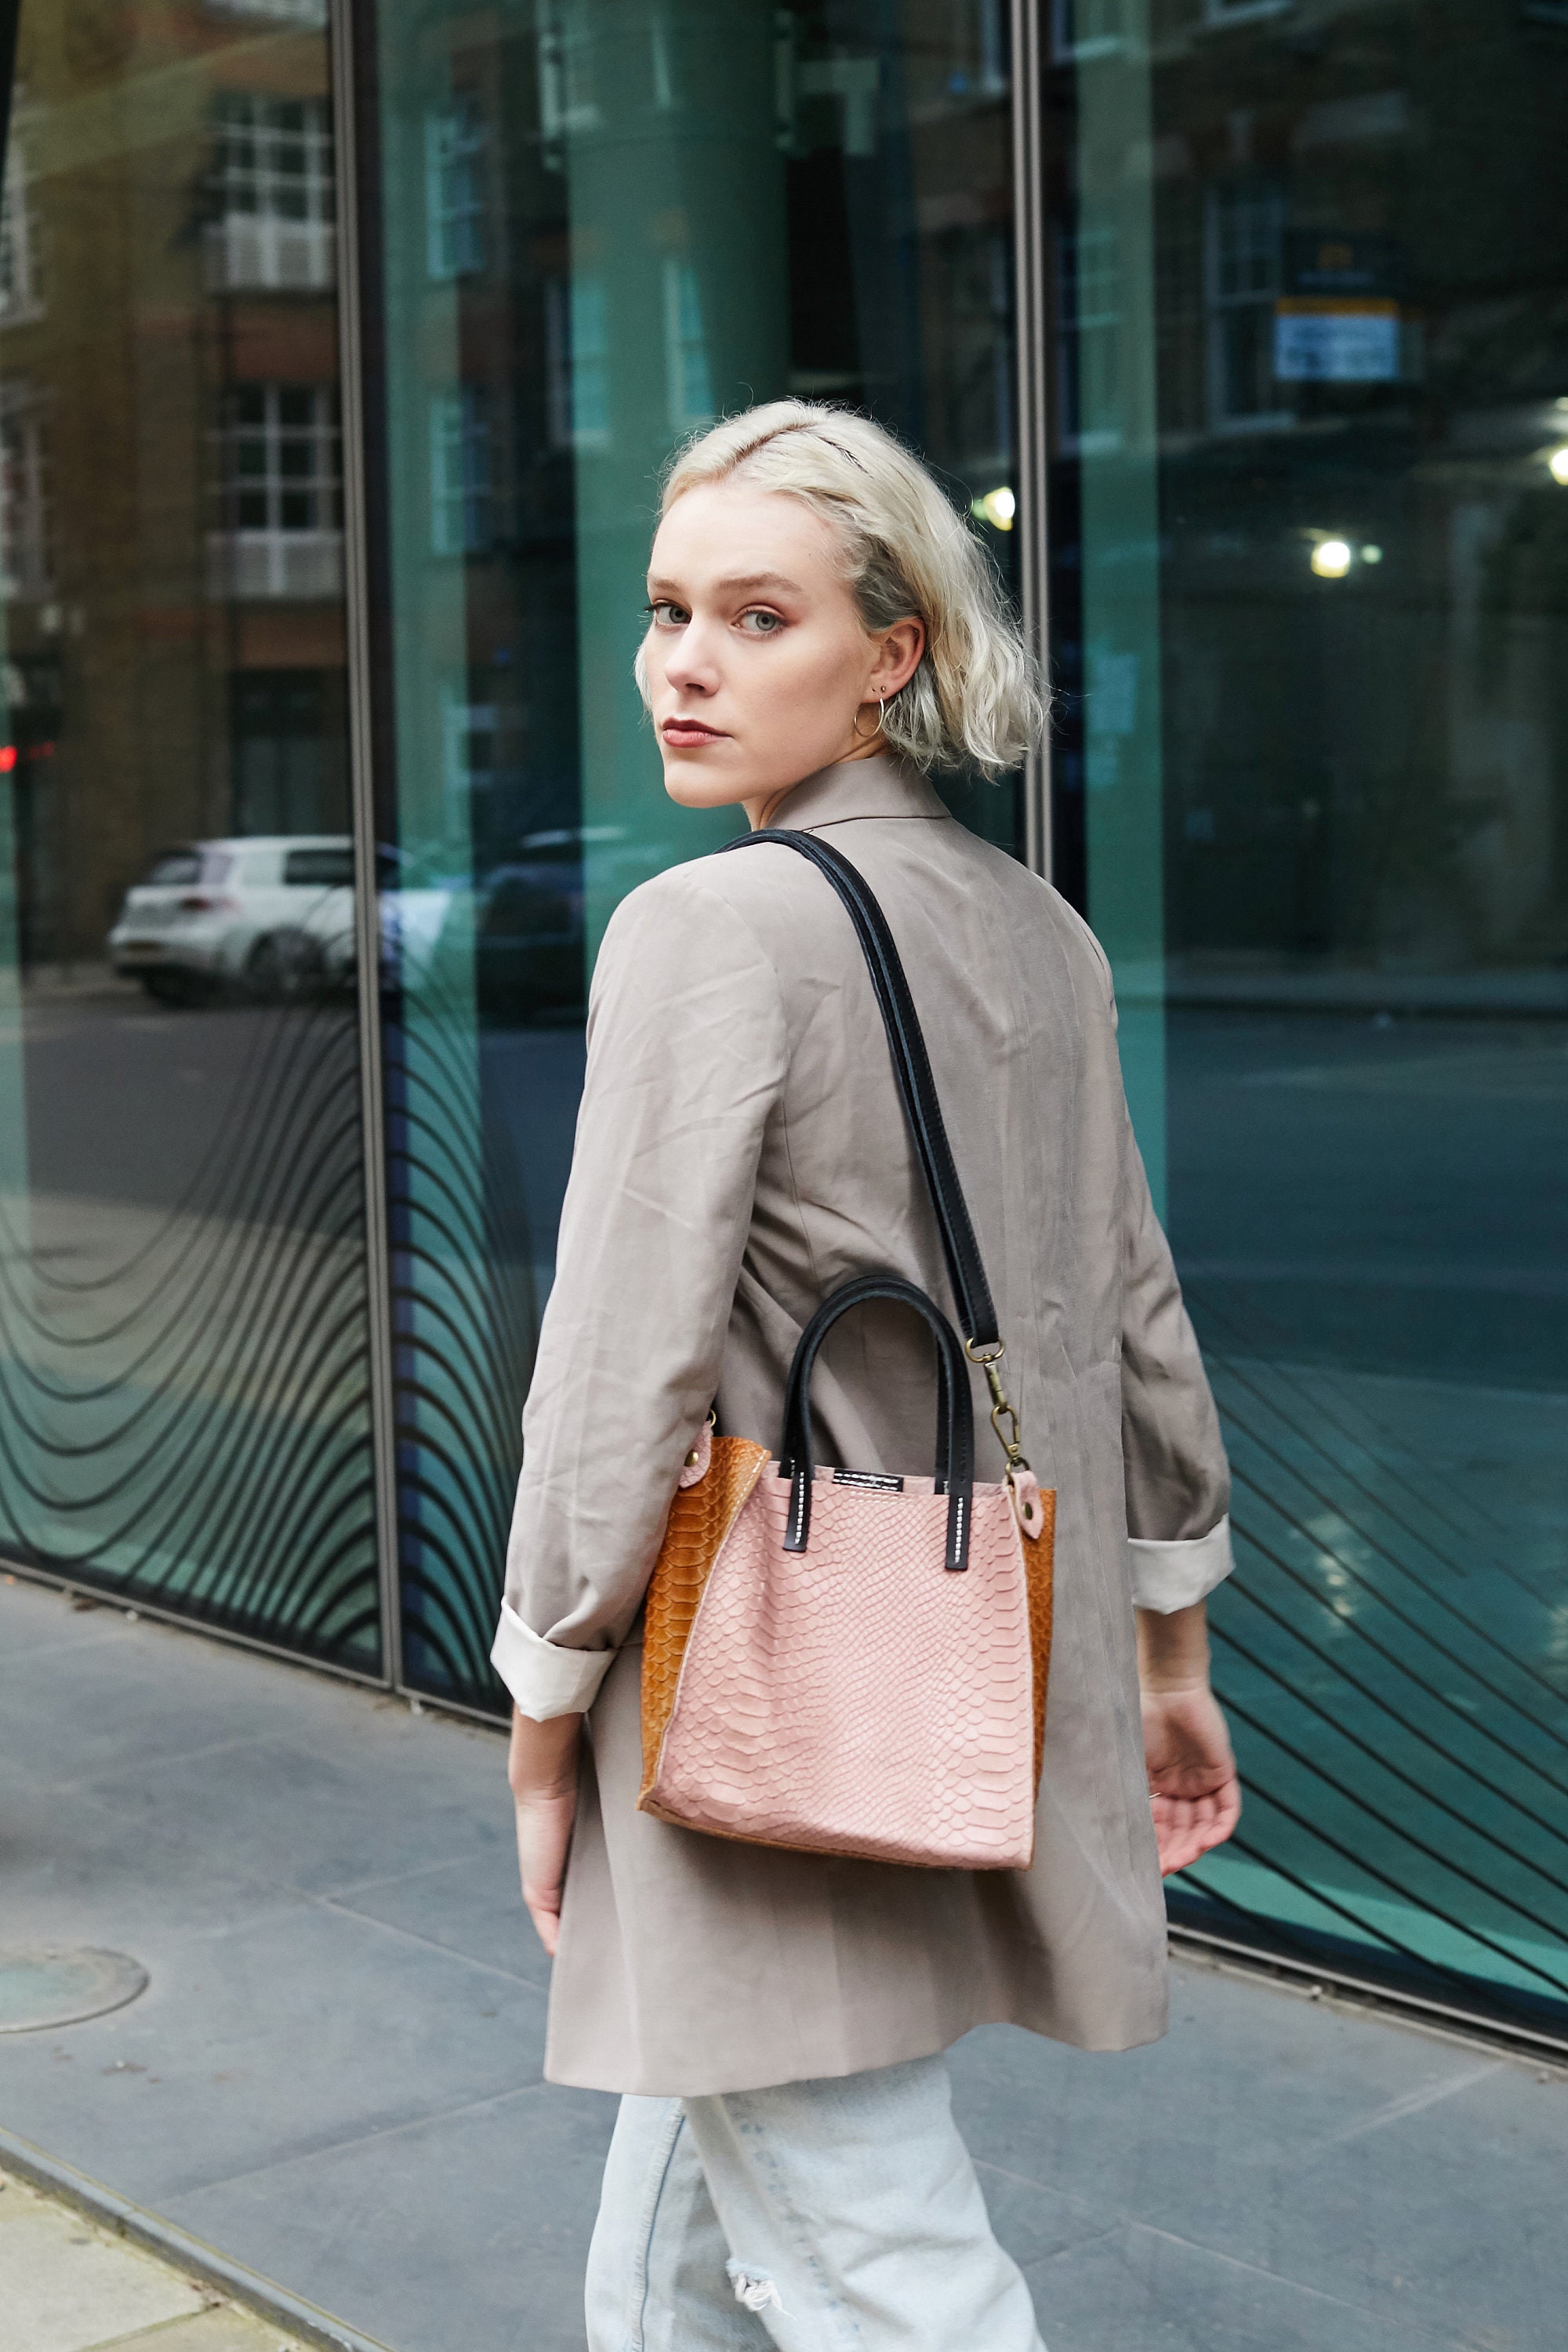 Pink Tote Bag / Pink Top Handle Bag / Brown Tote Handbag / -  Denmark